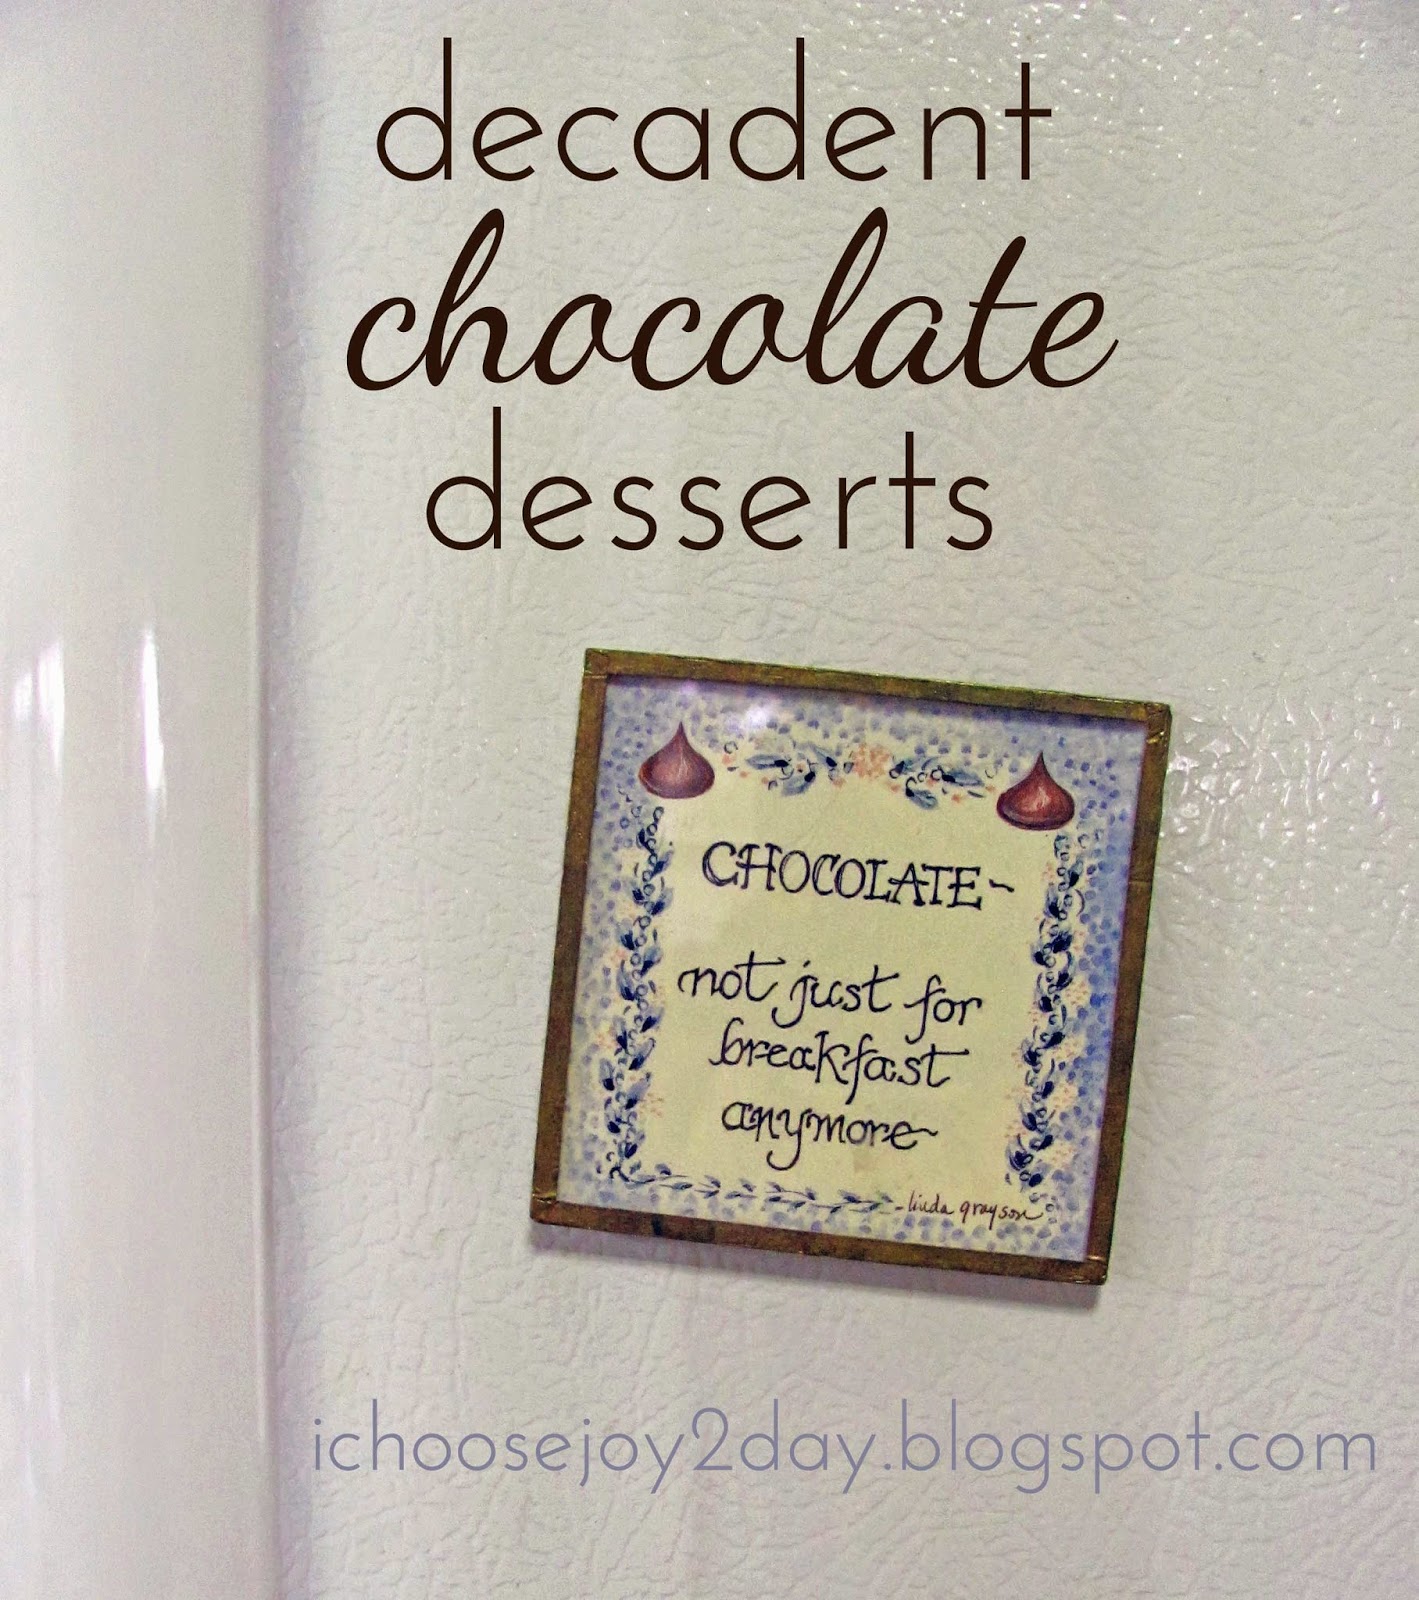 http://ichoosejoy2day.blogspot.com/2014/11/decadent-chocolate-desserts.html